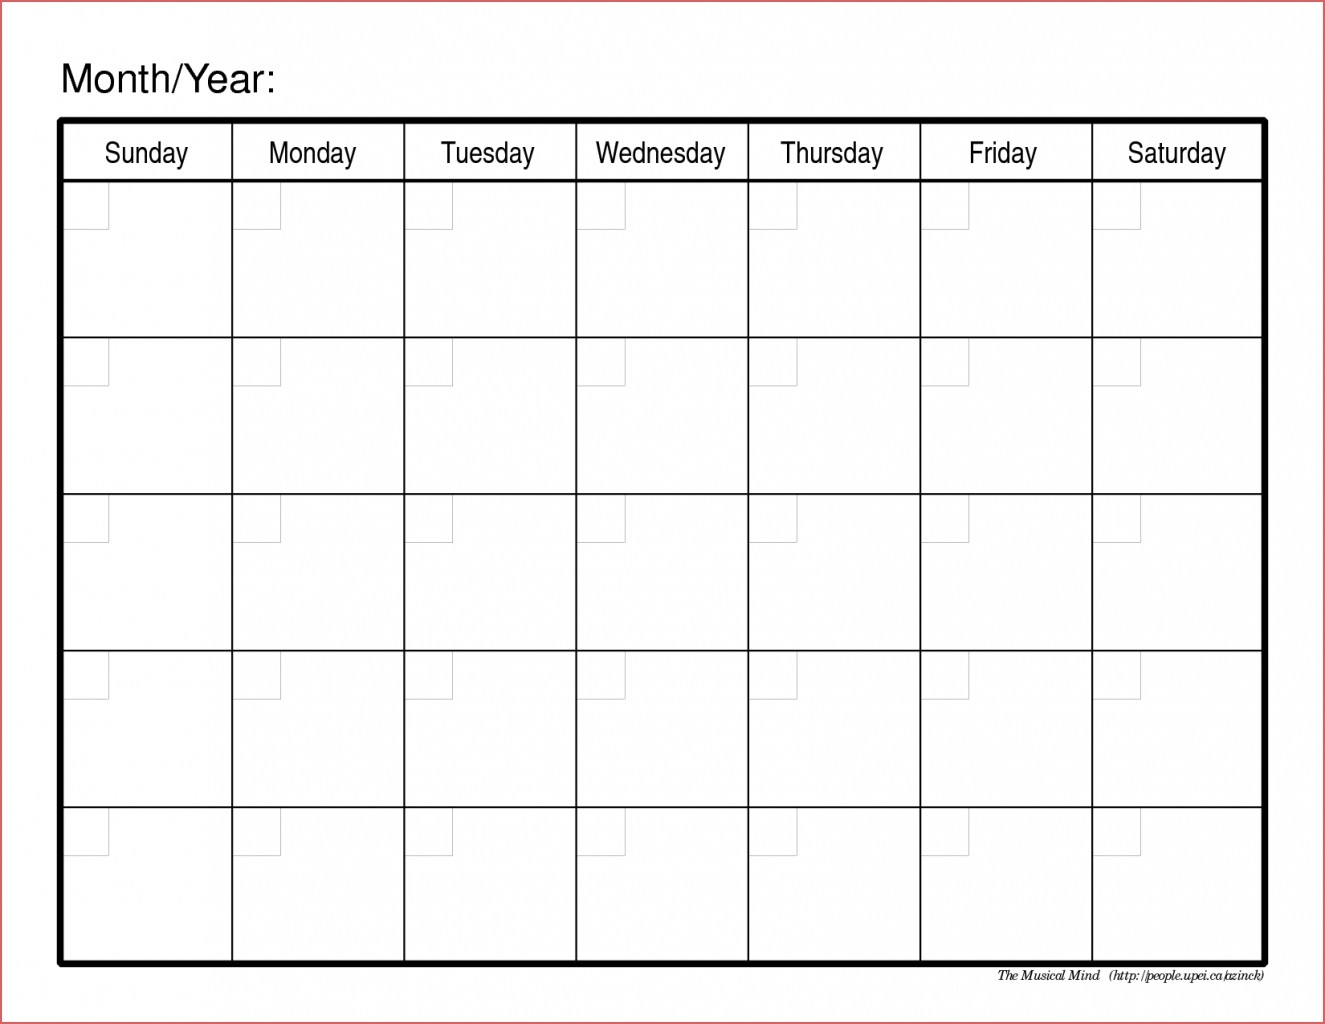 Online Calendar Planner Printable Calendar Month Printable Free with regard to Free Printable Calendars By Month